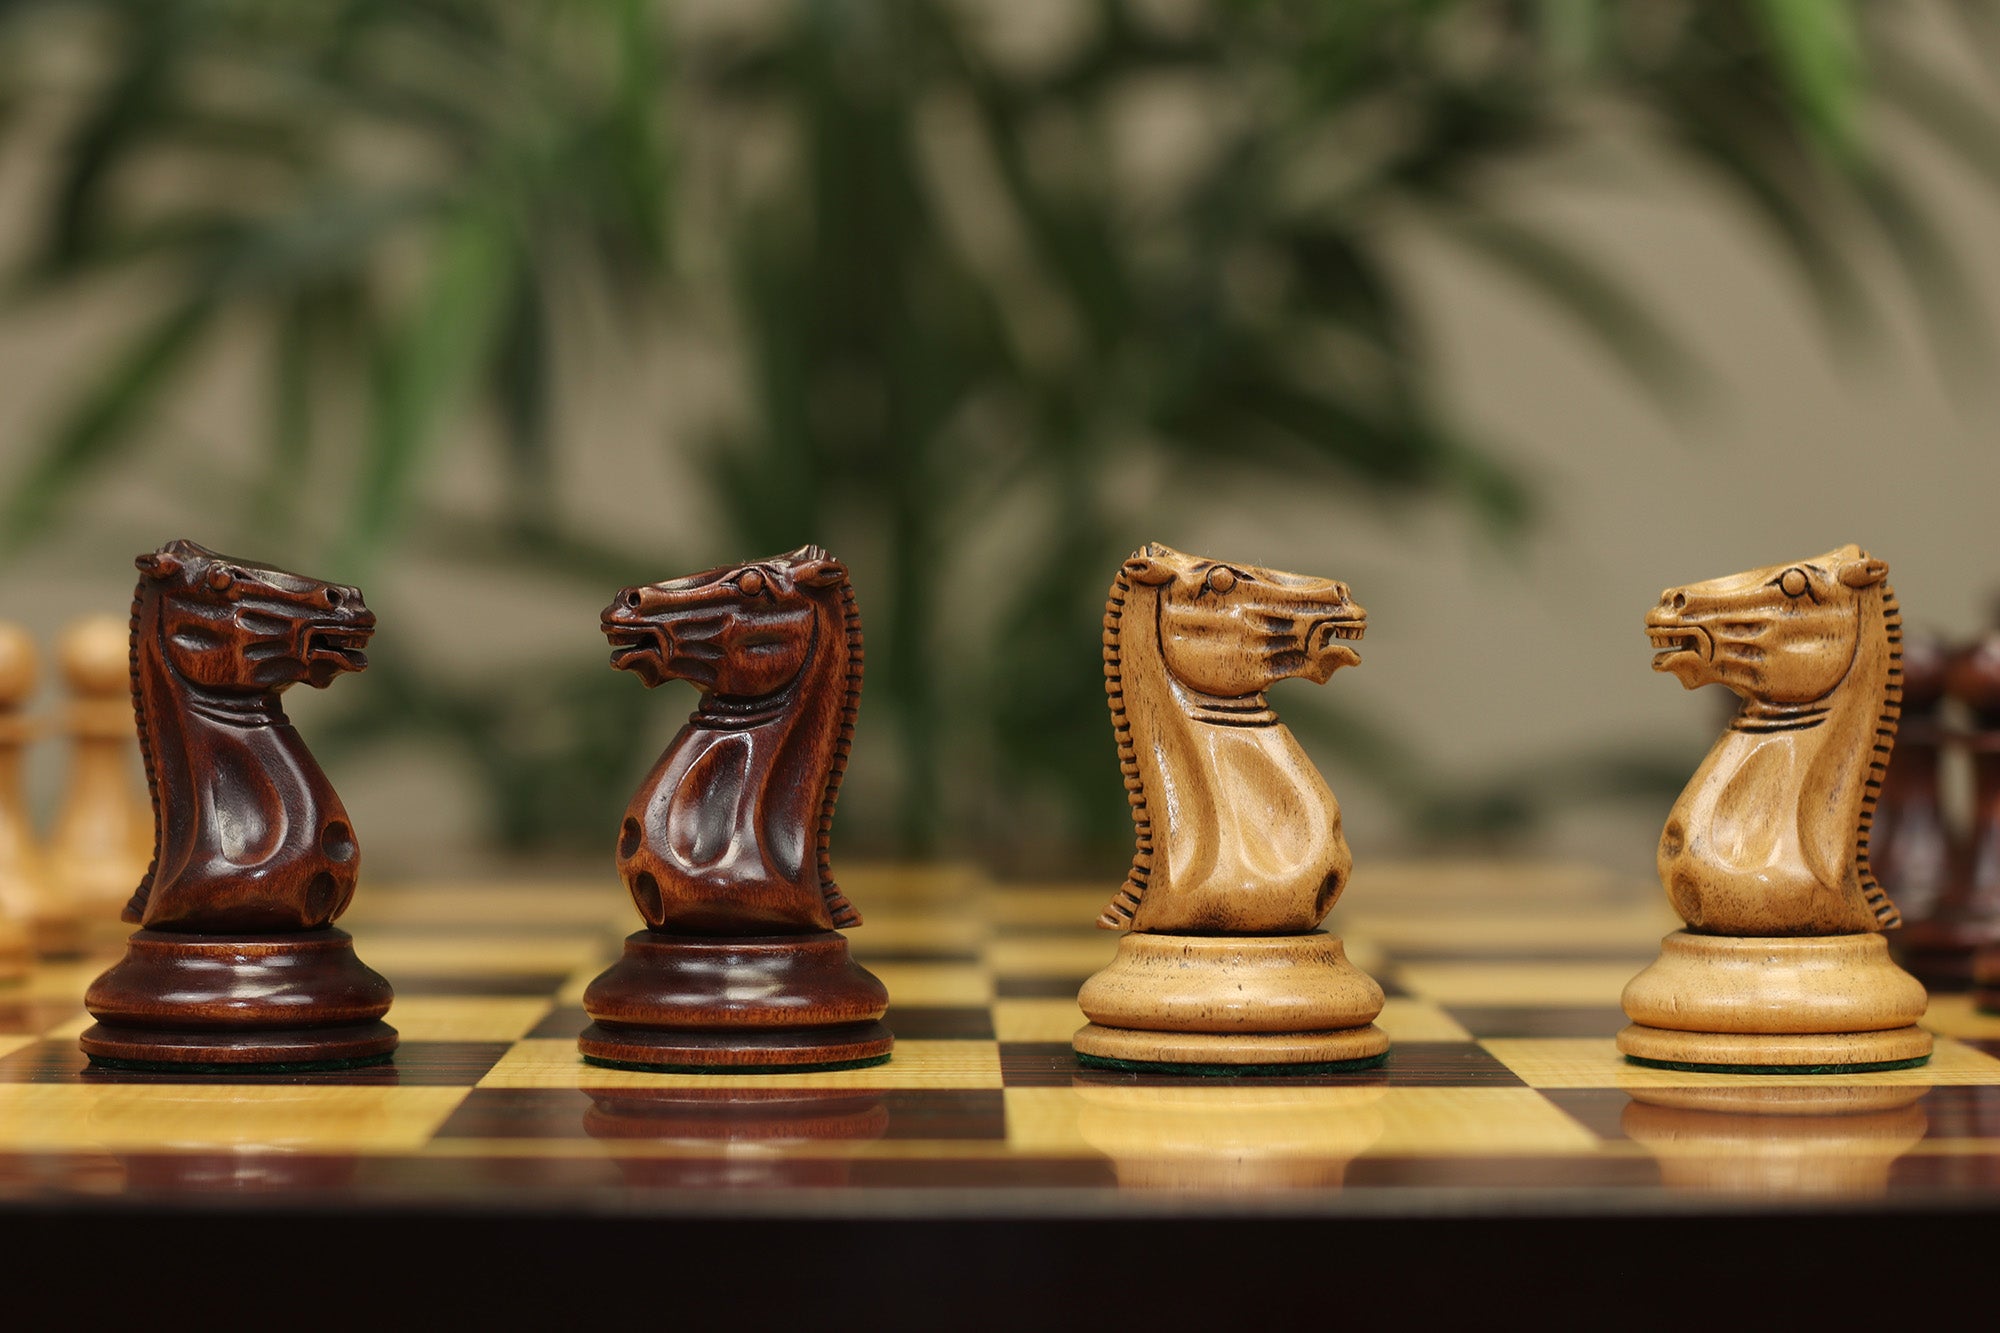 NATHANIEL COOKE SERIES 1849 Distressed/Mahogany Boxwood Chess Set King: 3.625"